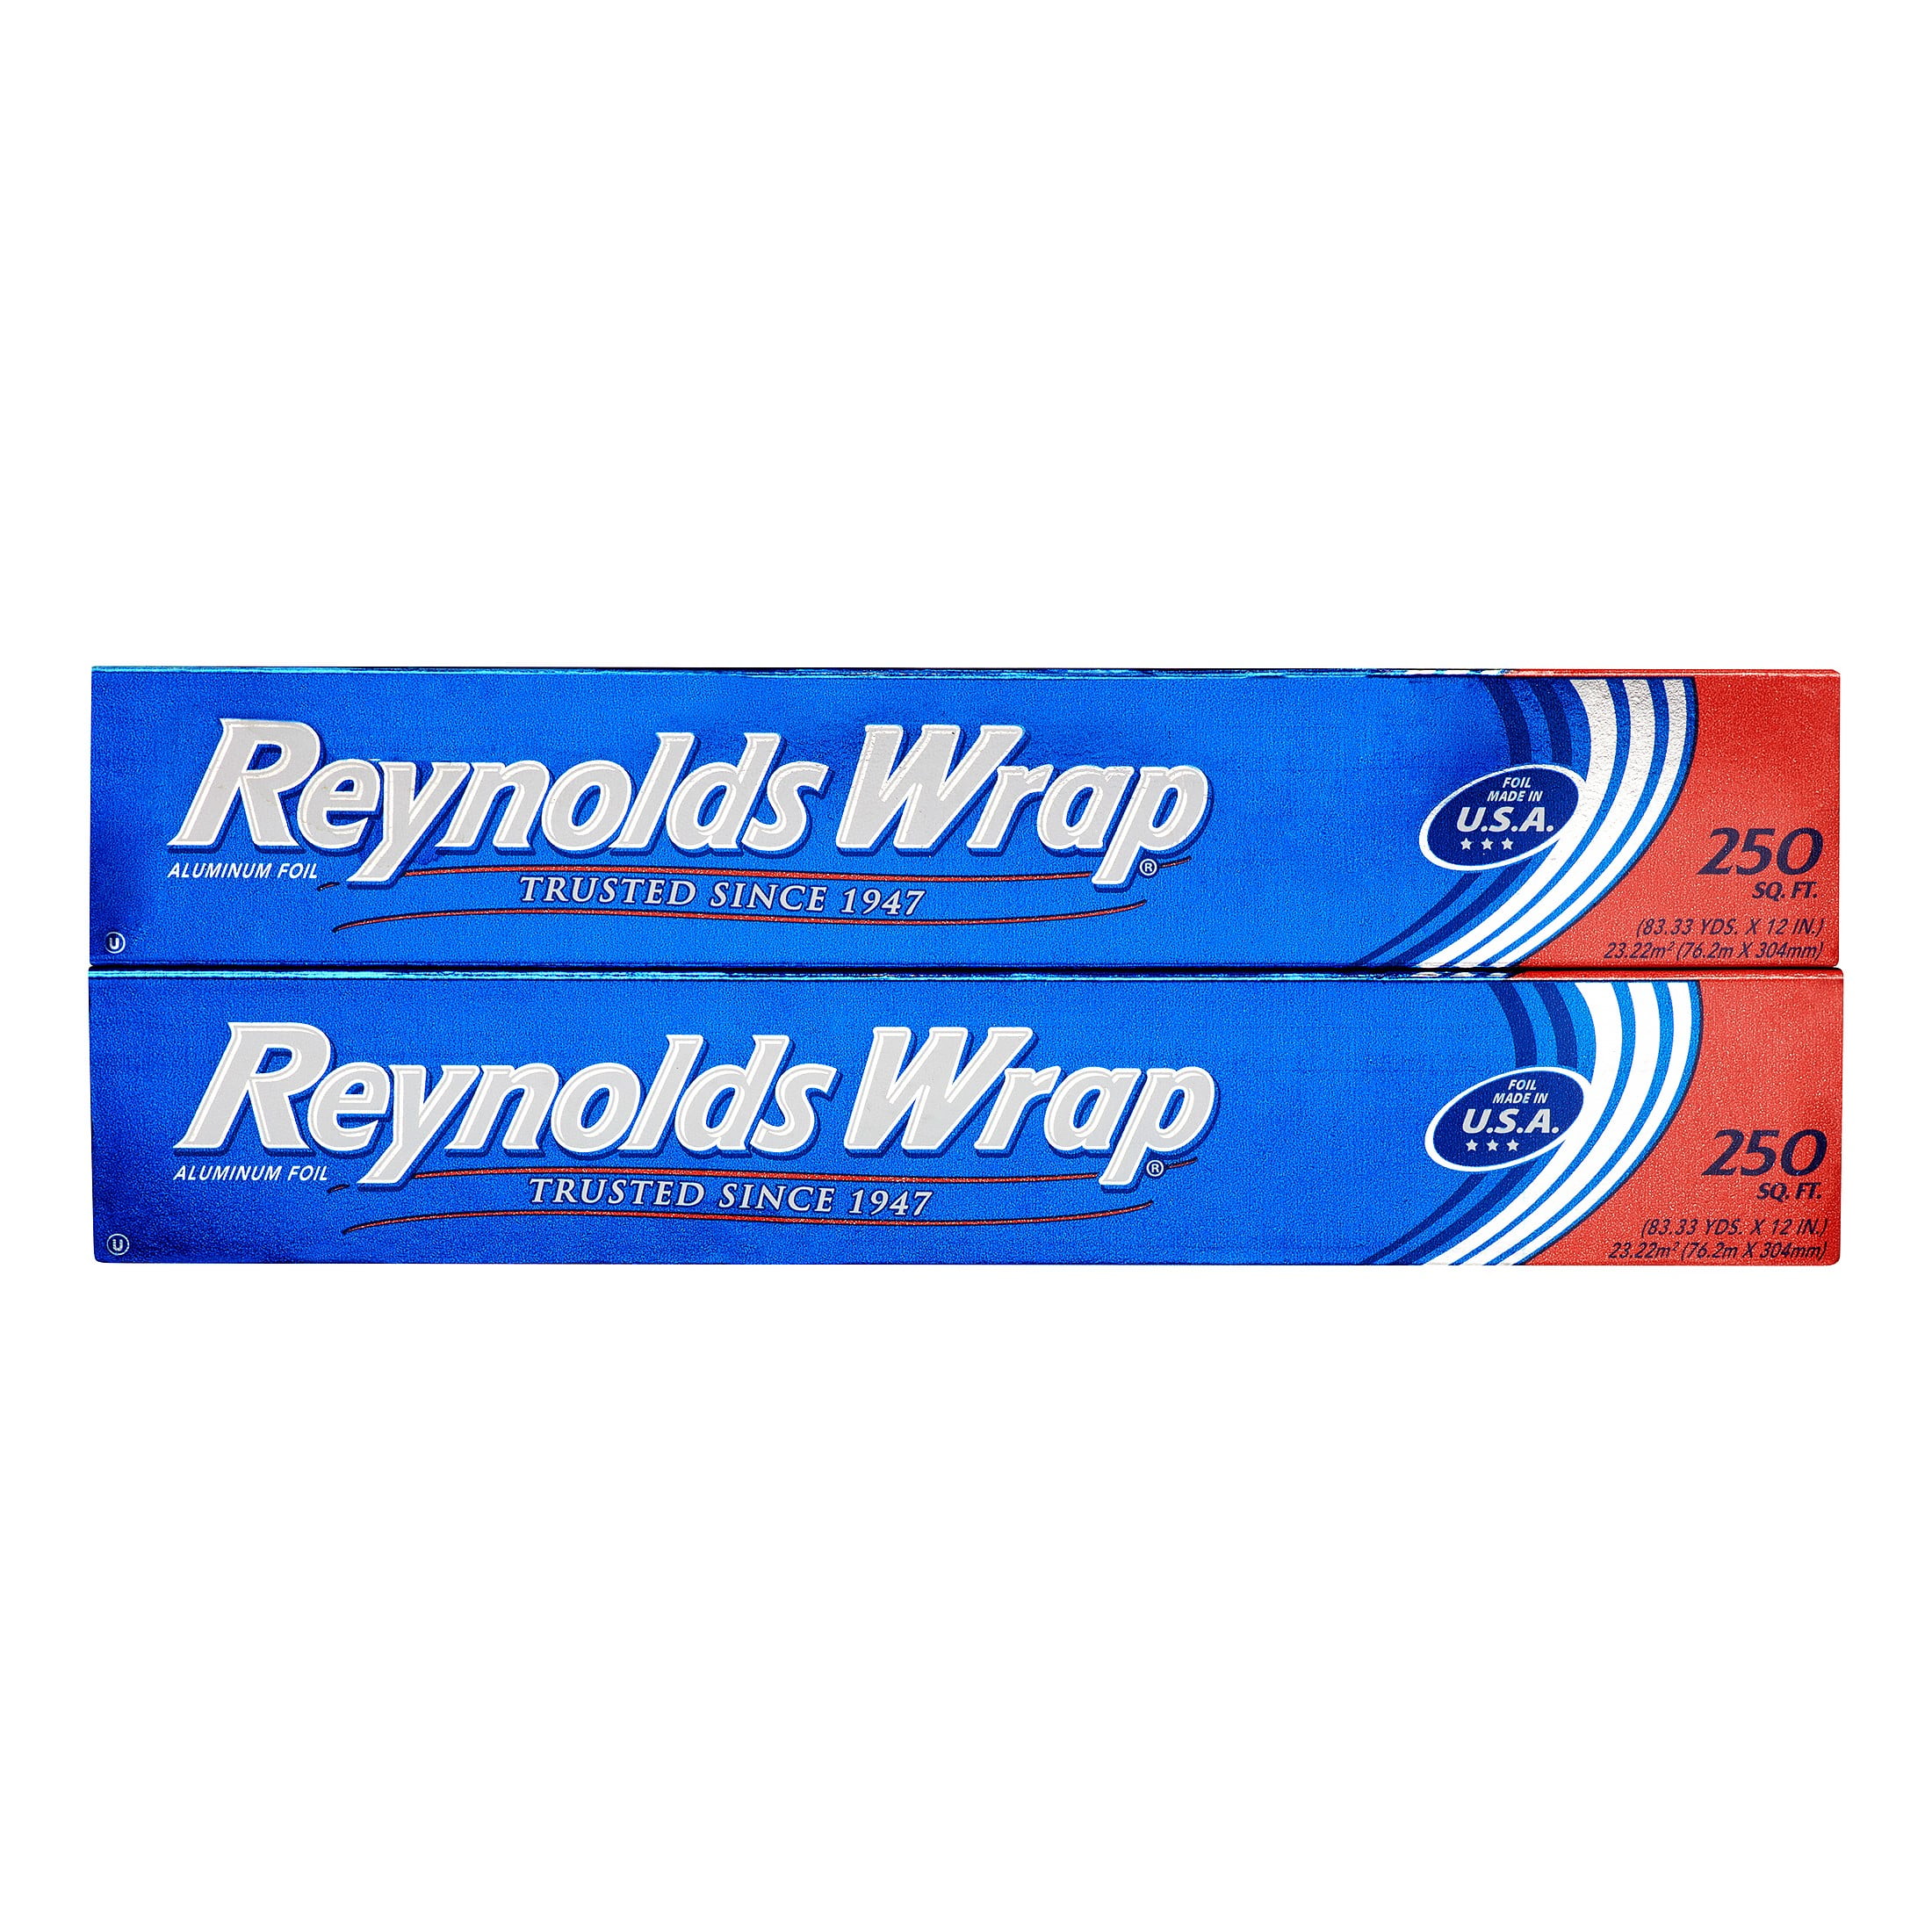 Reynolds Wrap Aluminum Foil 250 Sq ft - 2 Pack